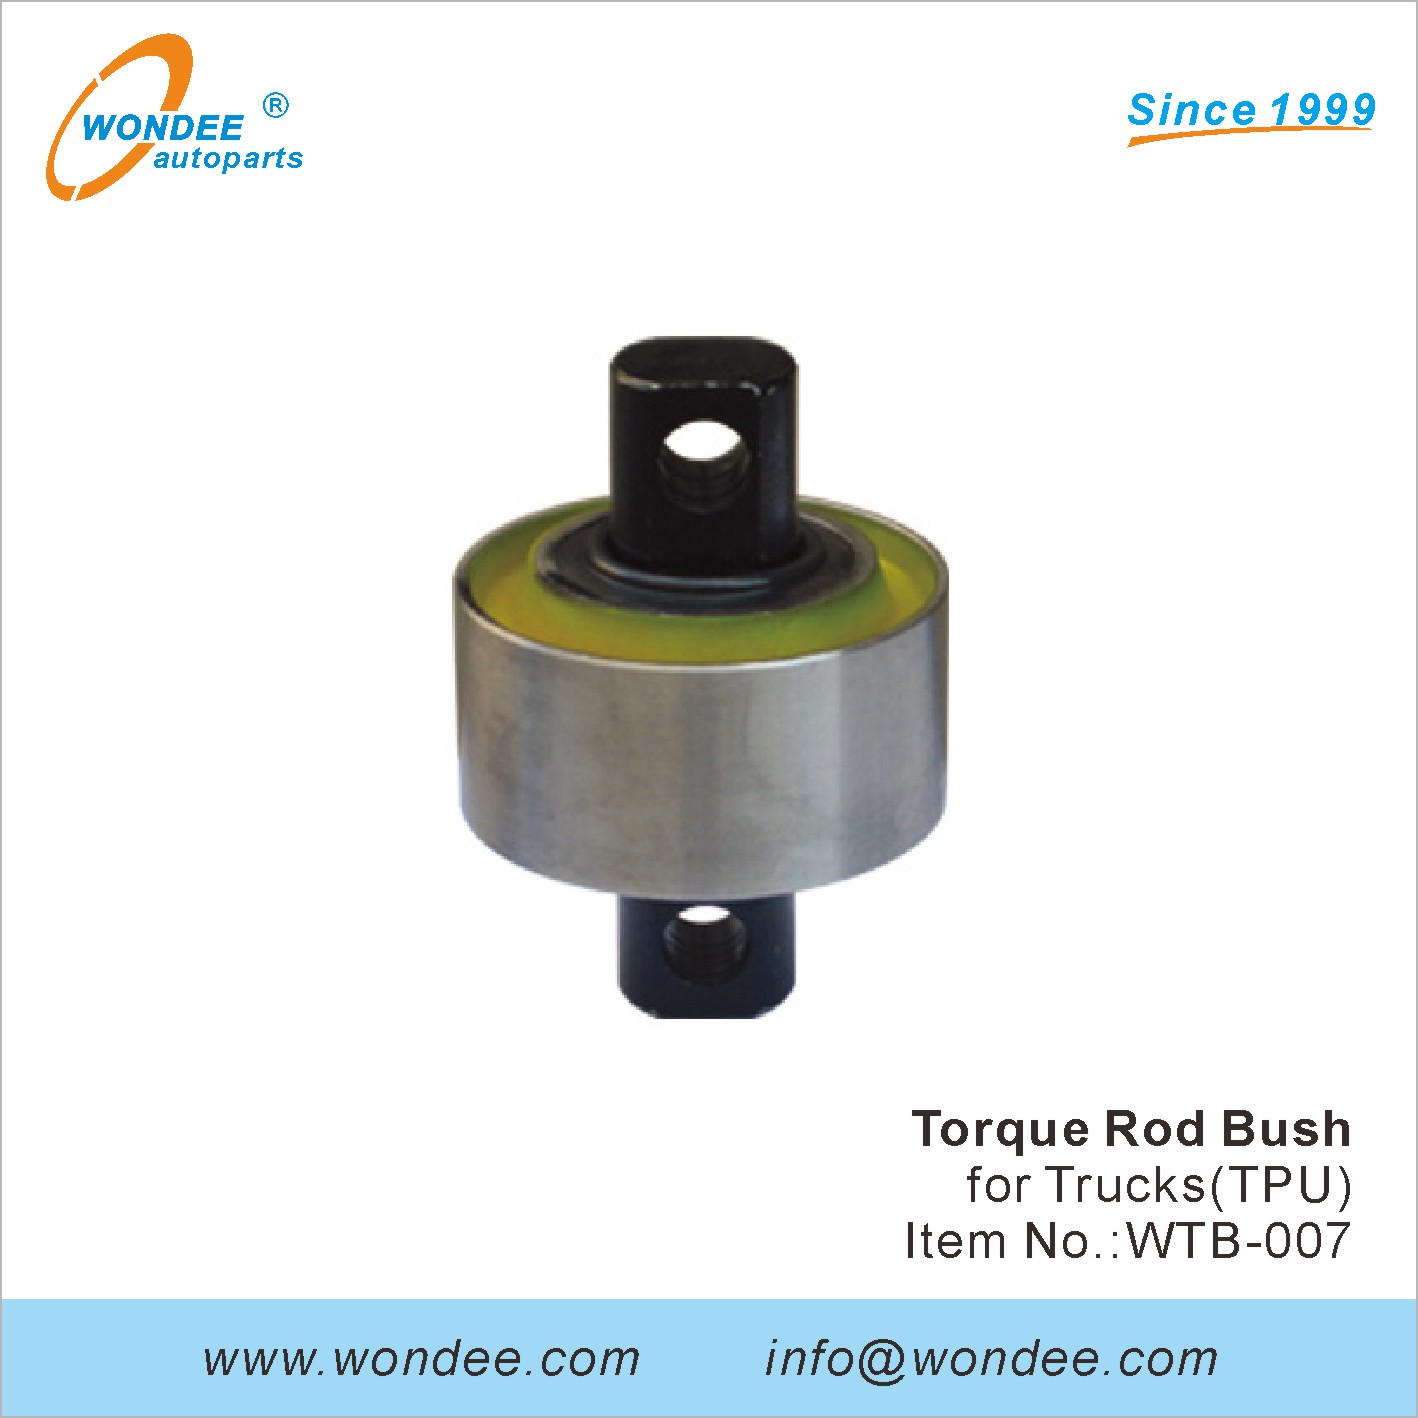 WONDEE torque rod bush (7)